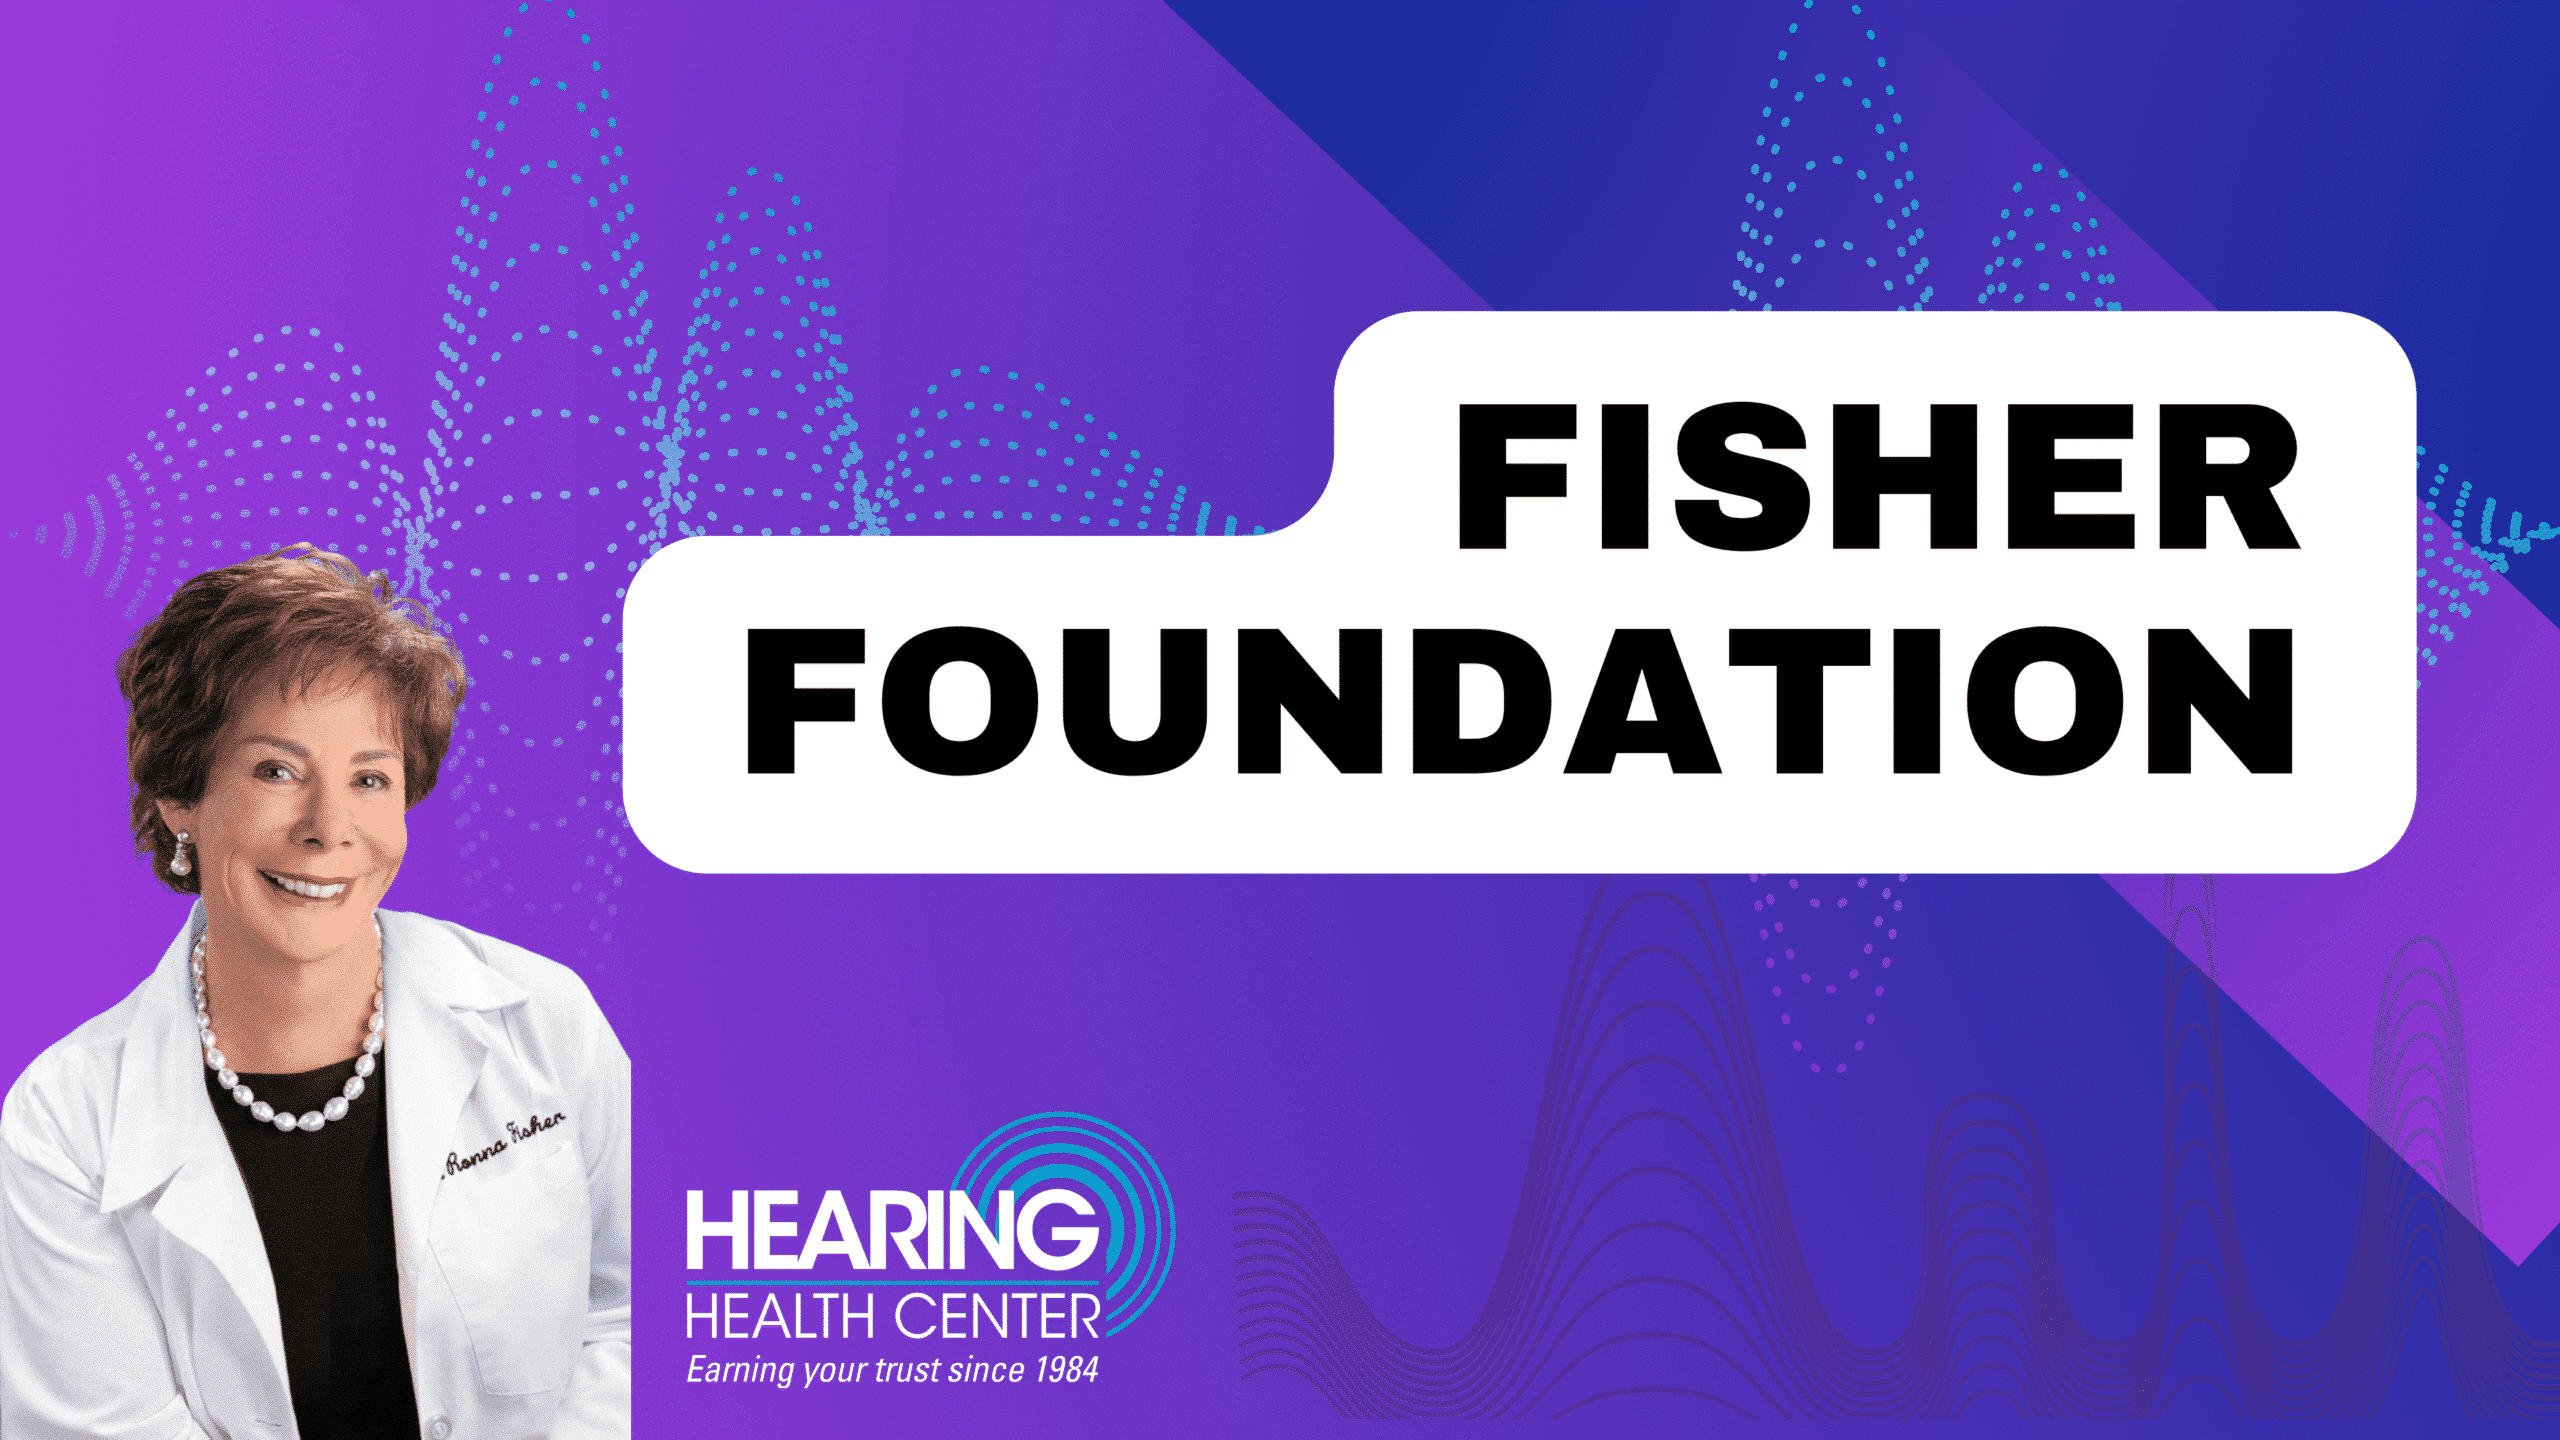 Fisher foundation 2